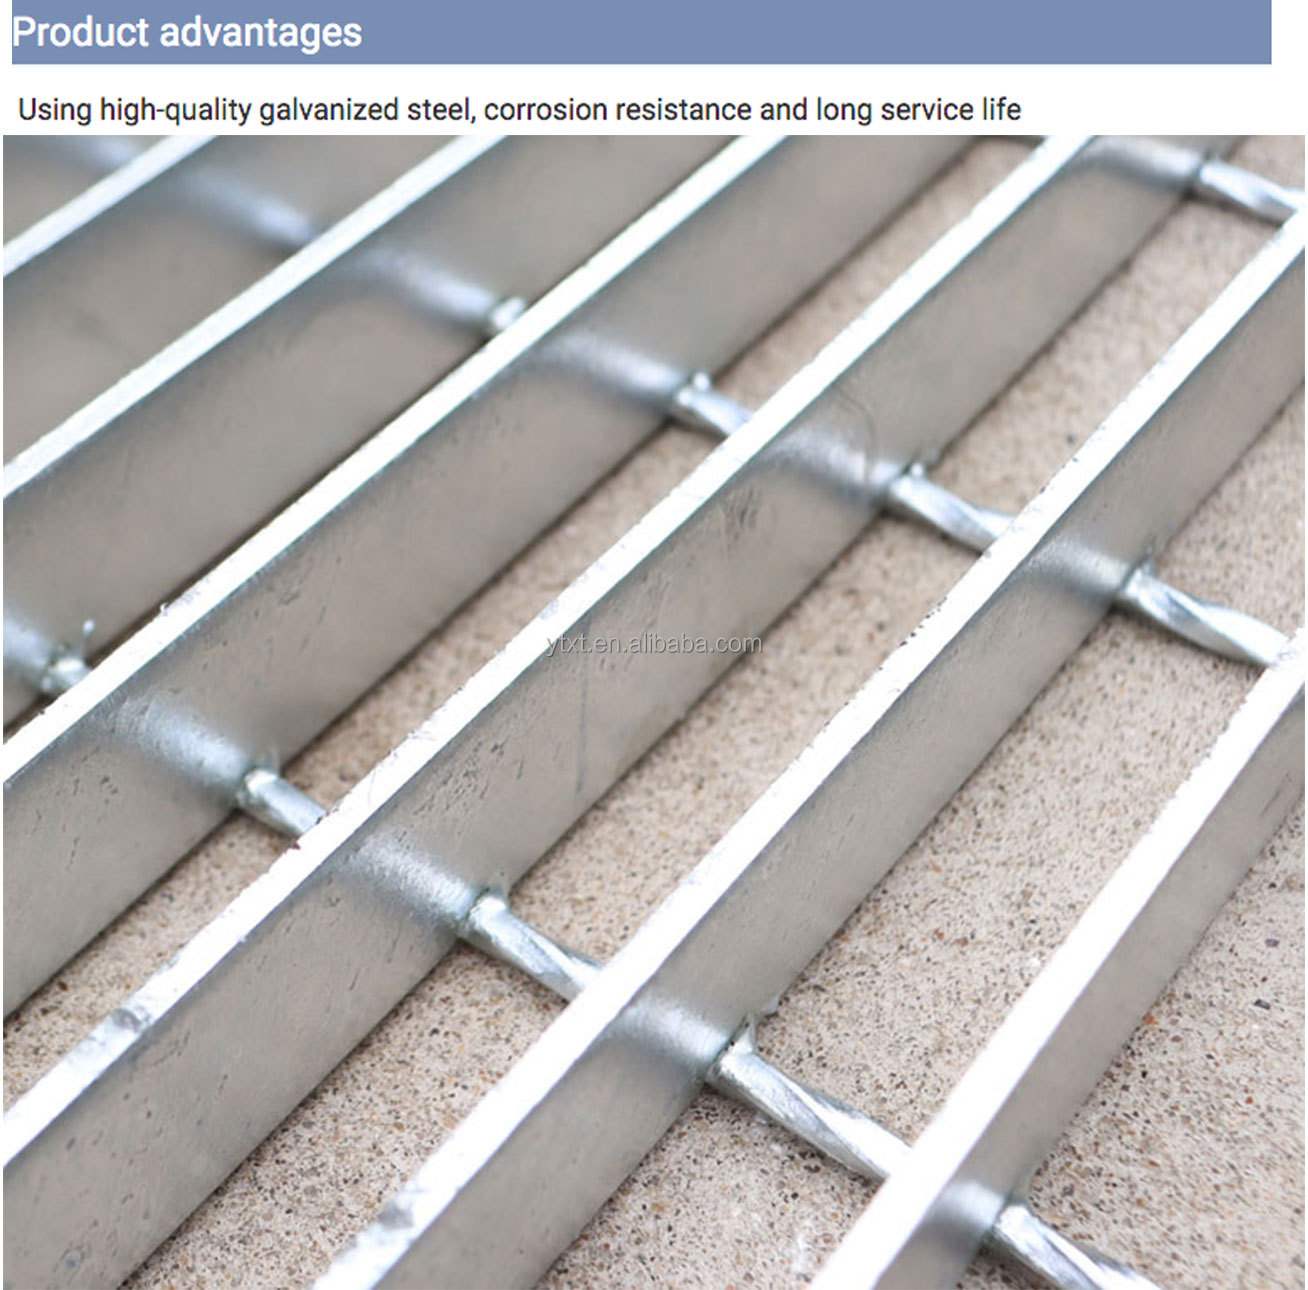 32*5 galvanized steel drain grate for garage drainage channel 32*5mm hot dip galvanized steel bar grating